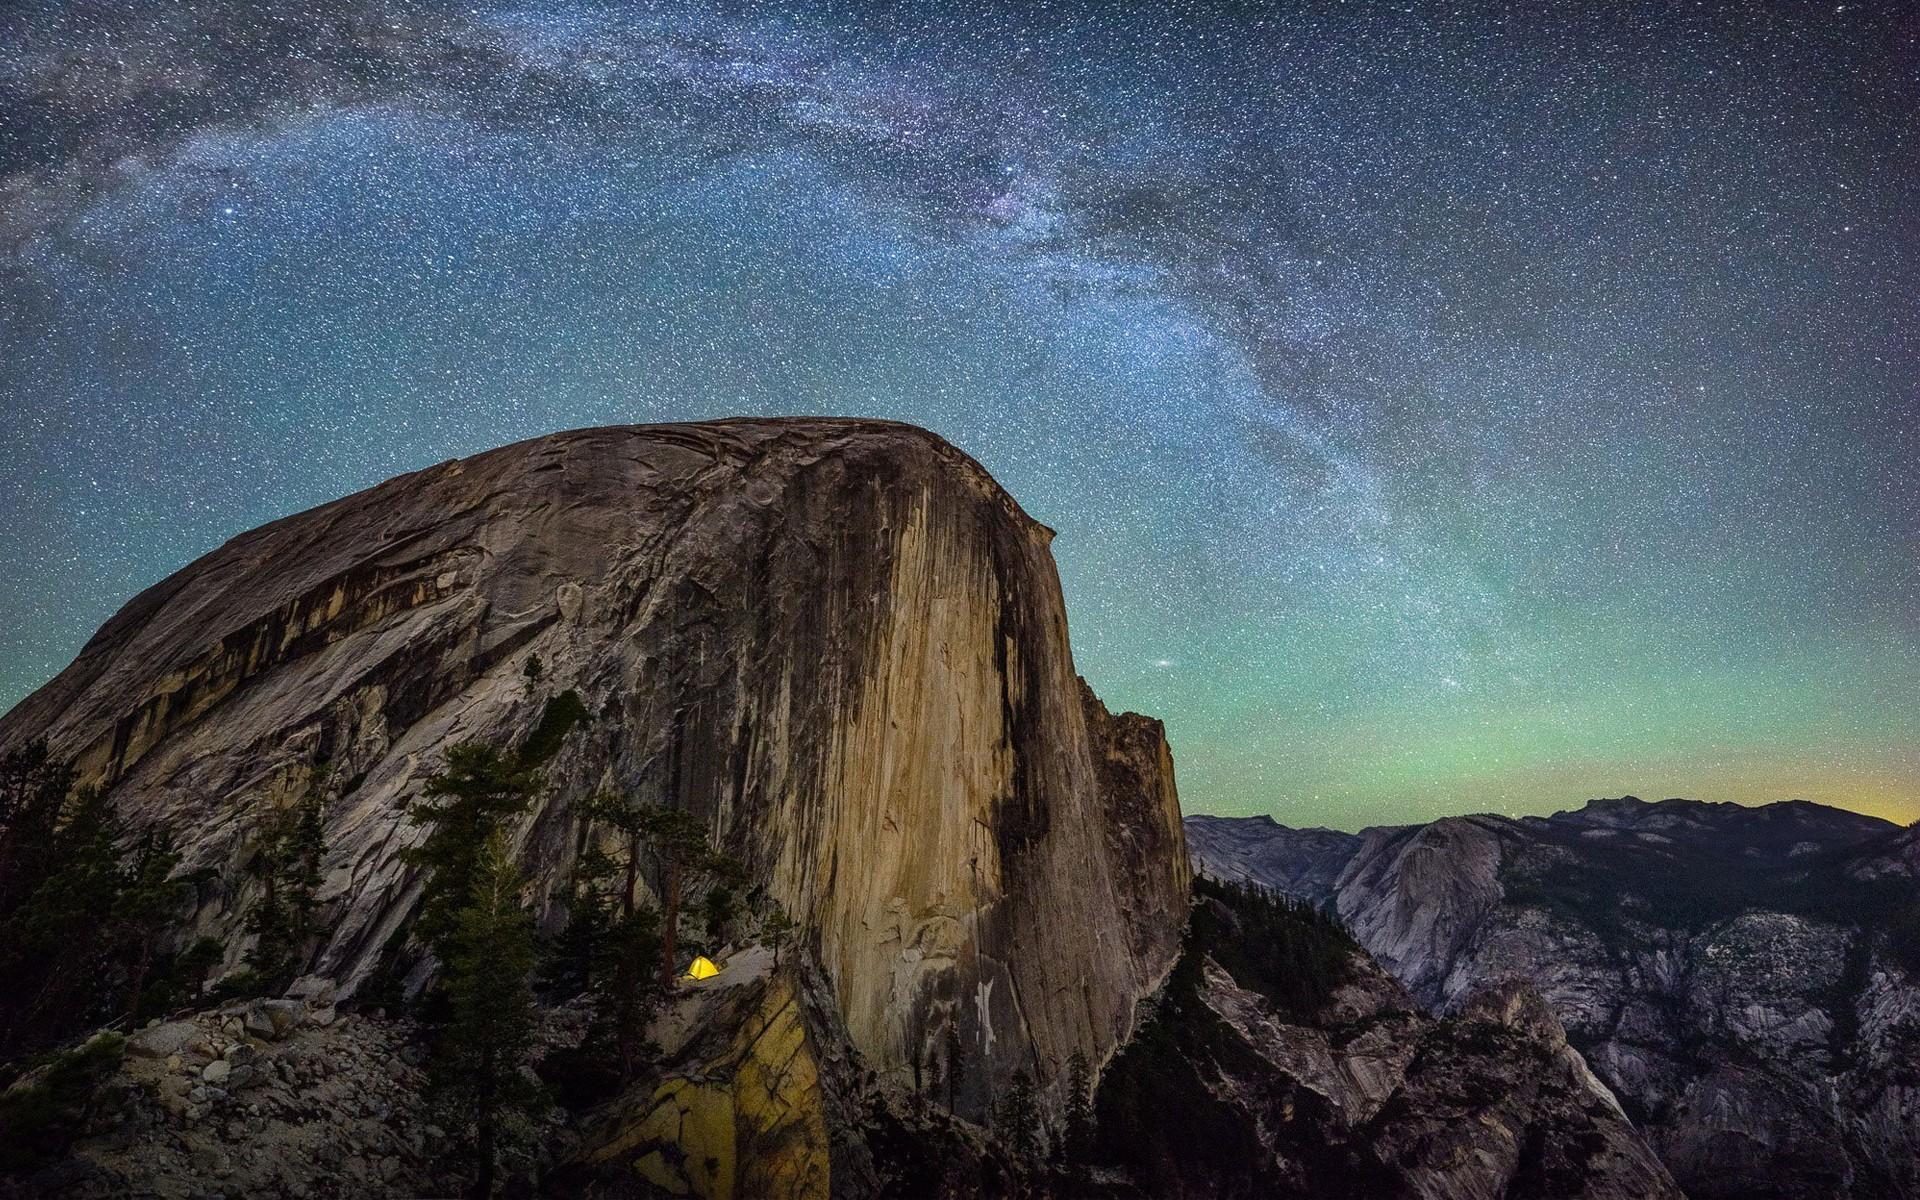 Yosemite Camp, HD Nature, 4k Wallpaper, Image, Background, Photo